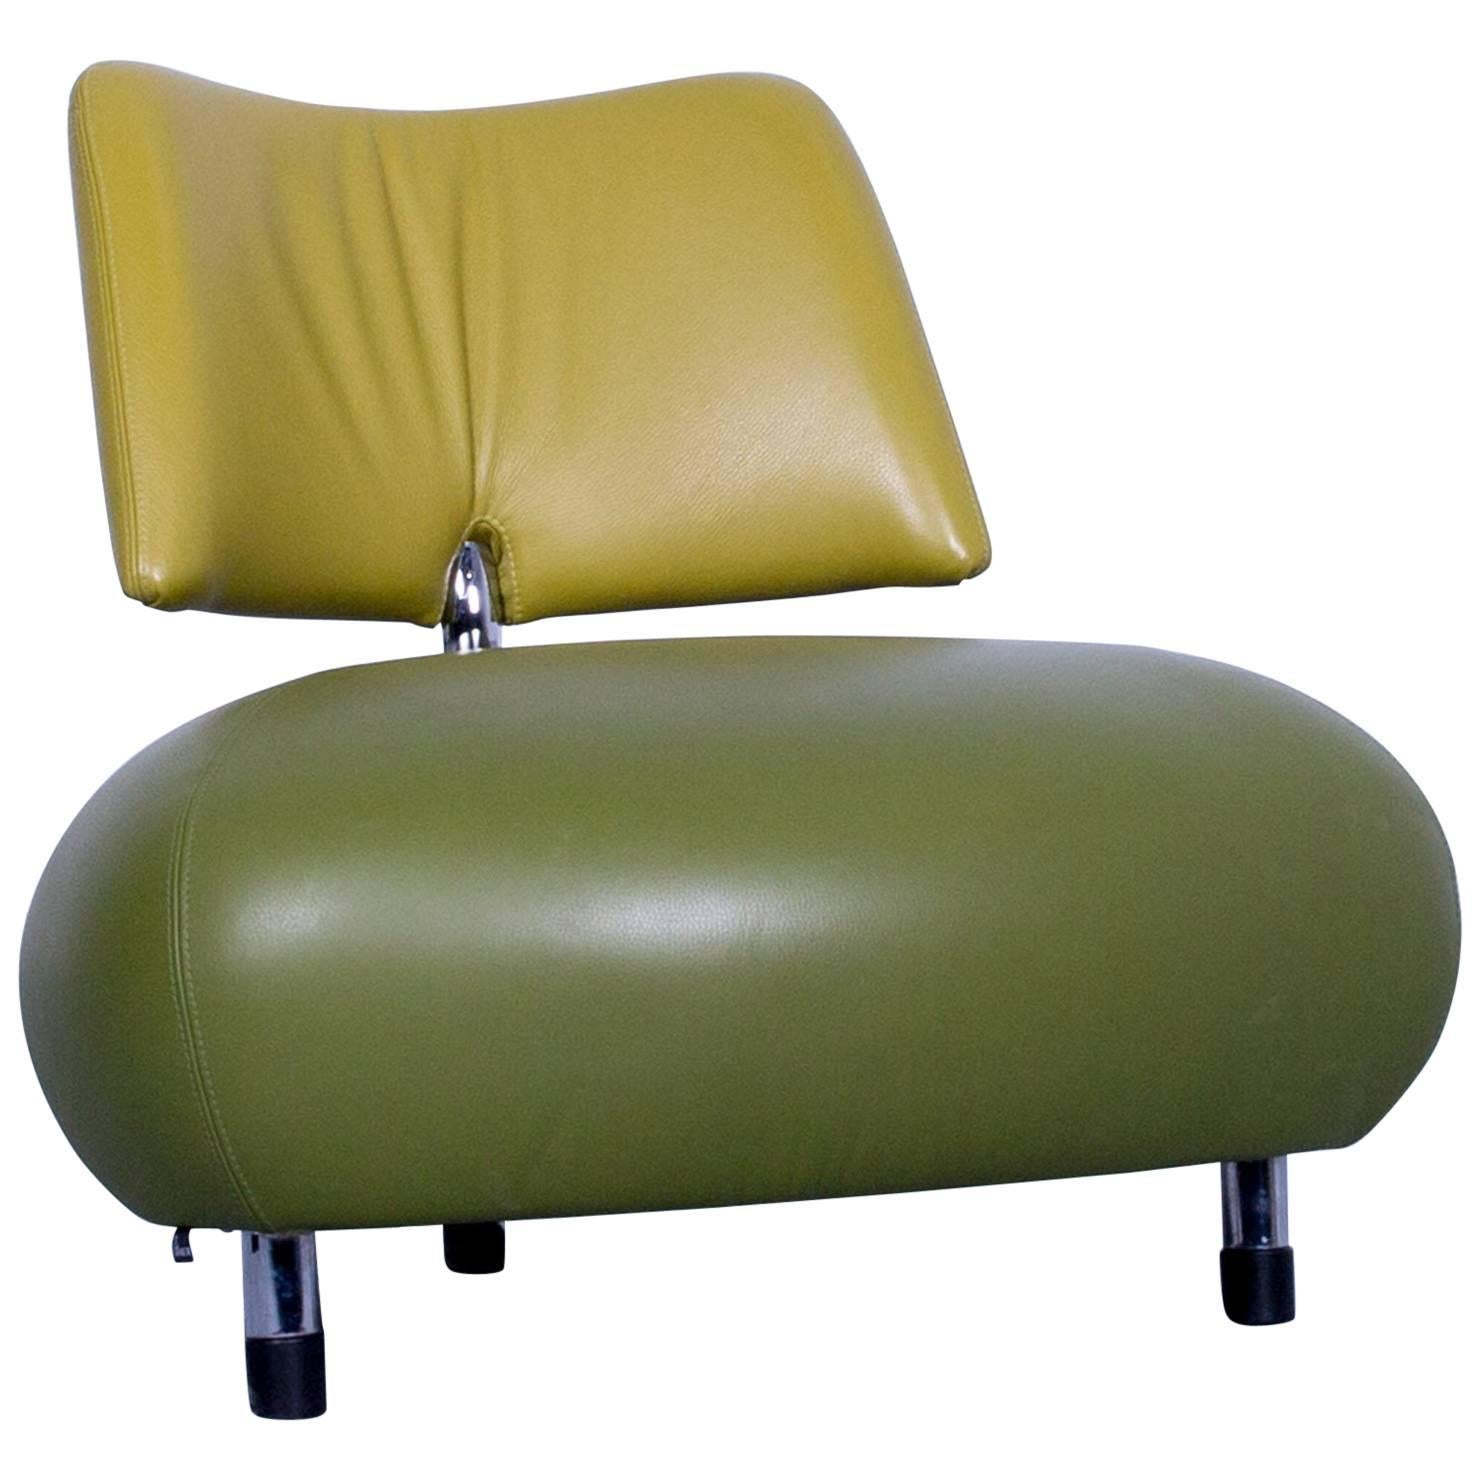 Leolux Pallone Pa Designer Chair Green One Seat Modern by Roy De Scheemaker 1989 For Sale